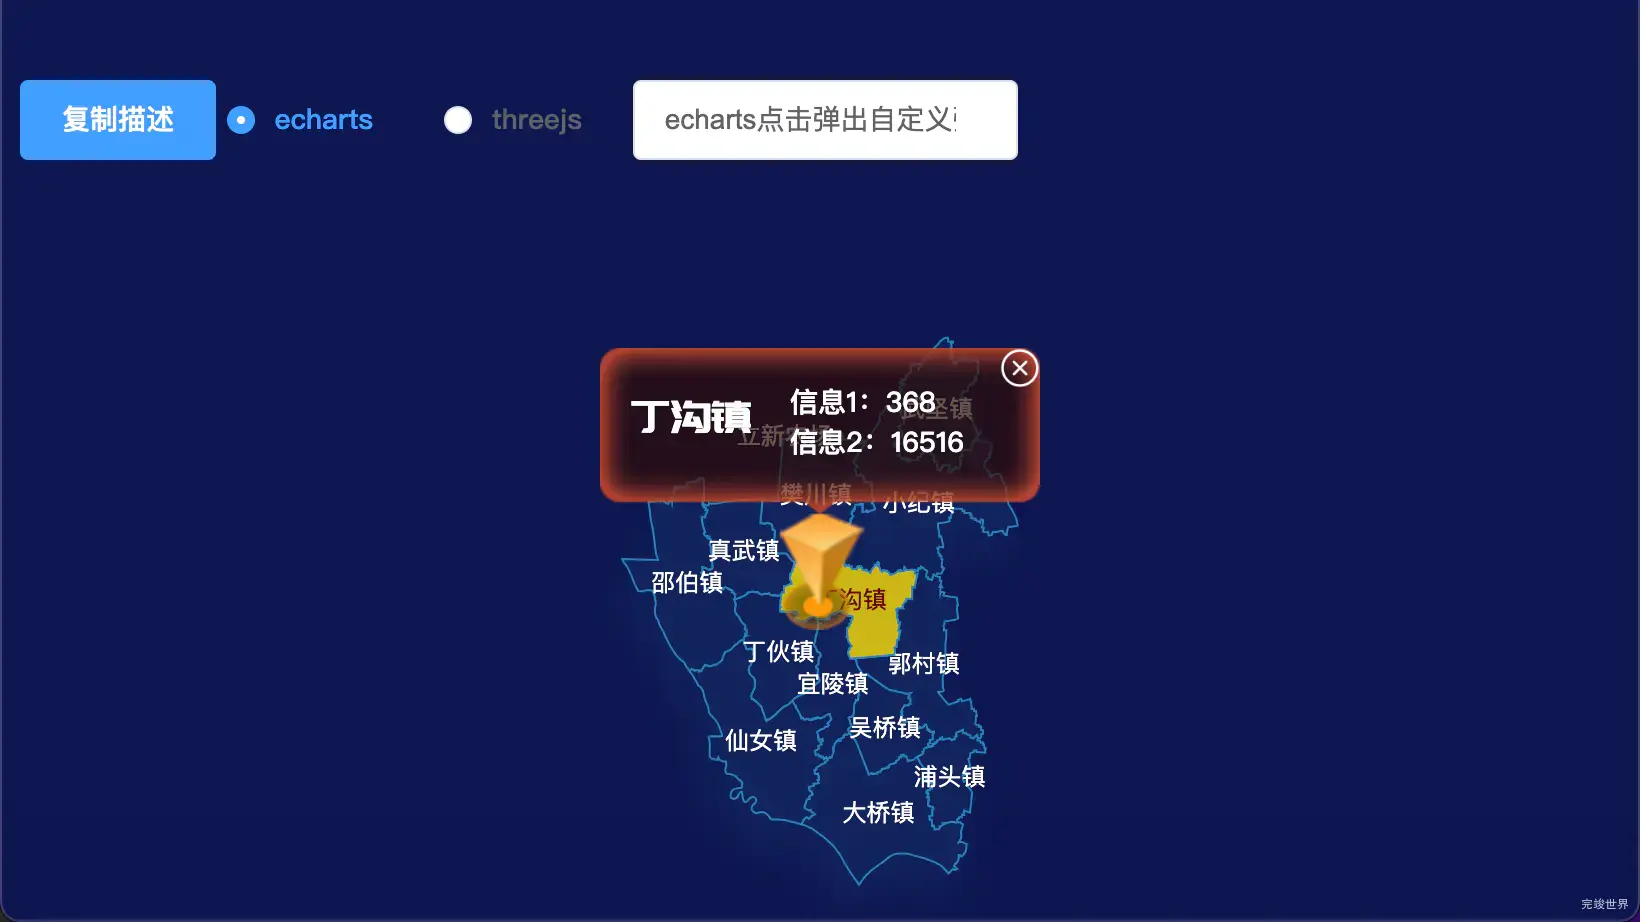 echarts扬州市江都区geoJson地图点击弹出自定义弹窗